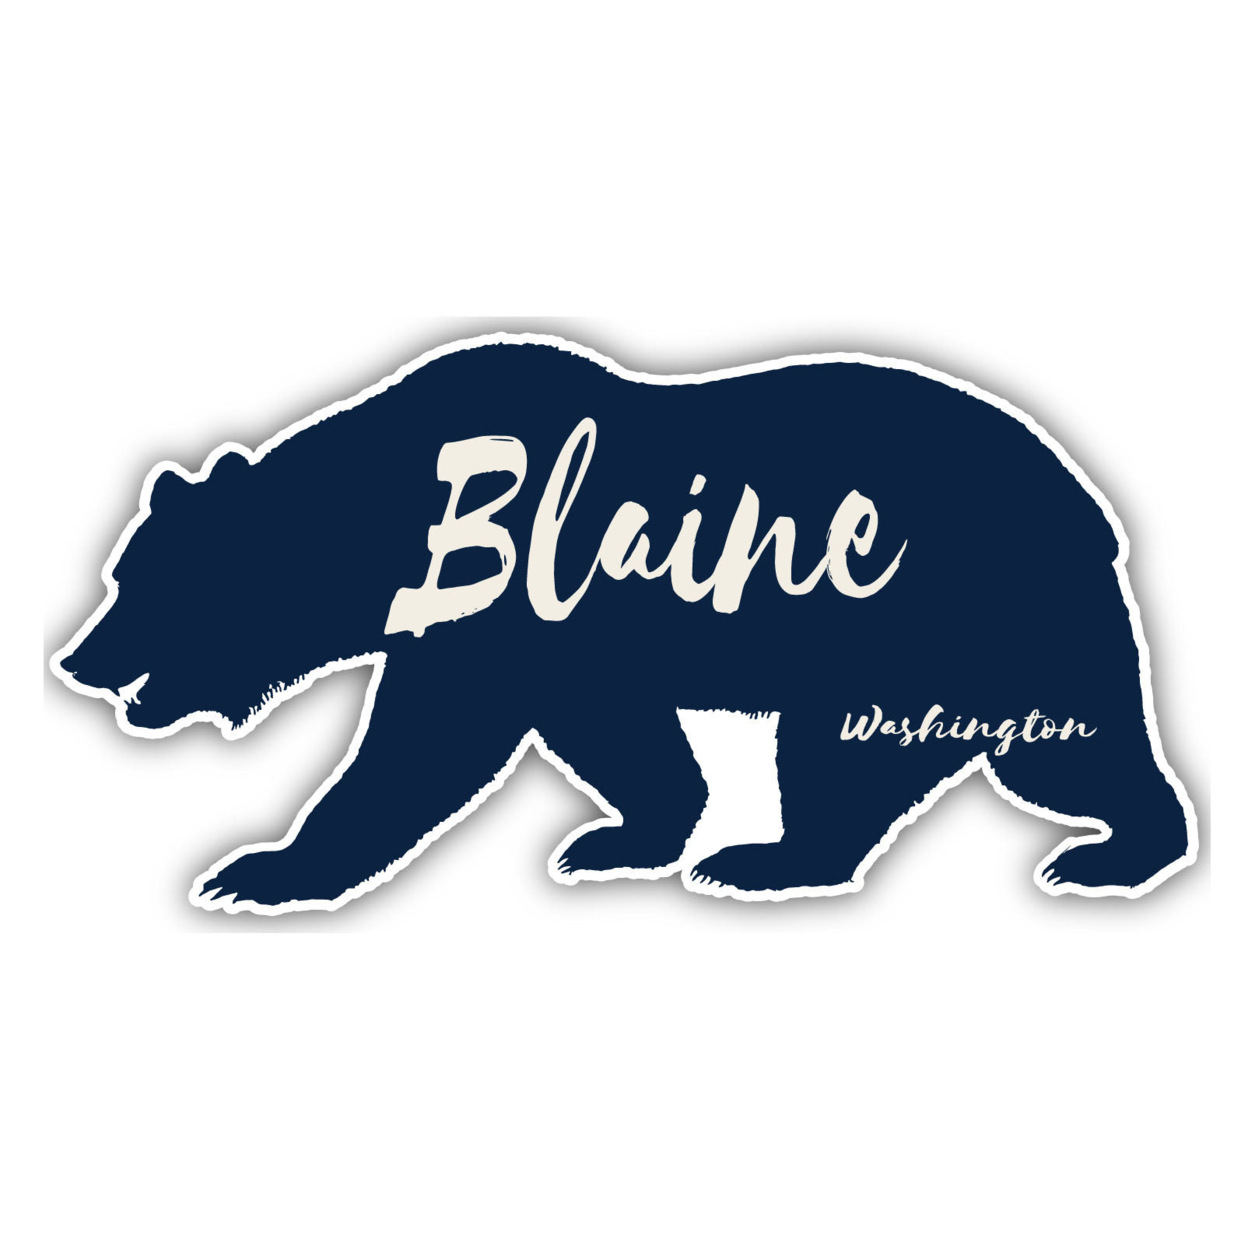 Blaine Washington Souvenir Decorative Stickers (Choose Theme And Size) - 4-Pack, 6-Inch, Bear